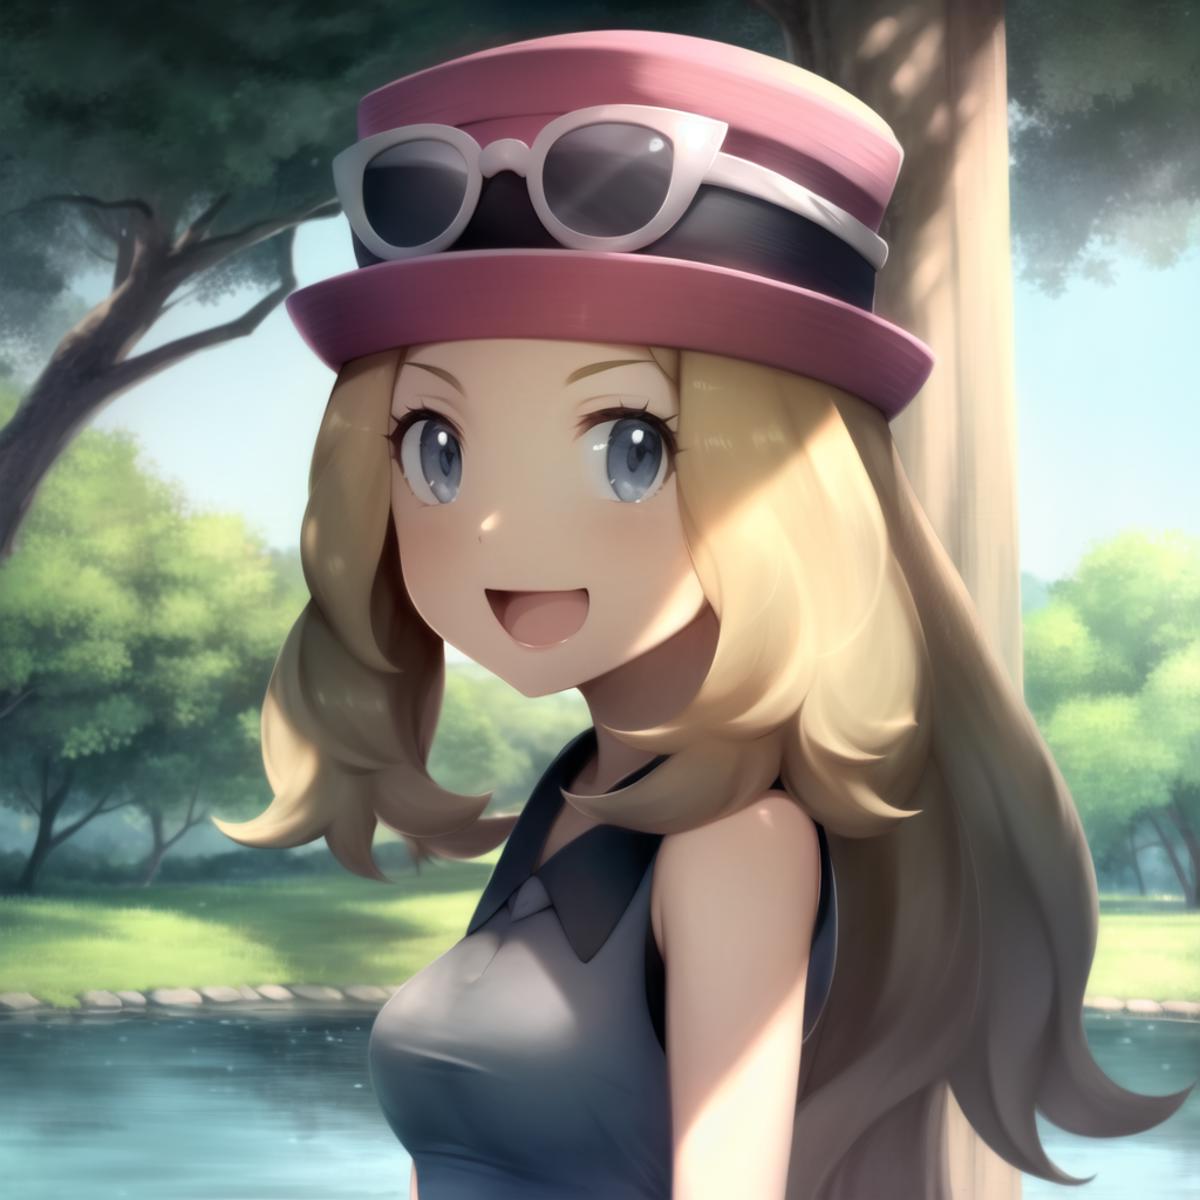 [SD 1.5] Pokemon - Serena (Game) image by ARandomModelMaker